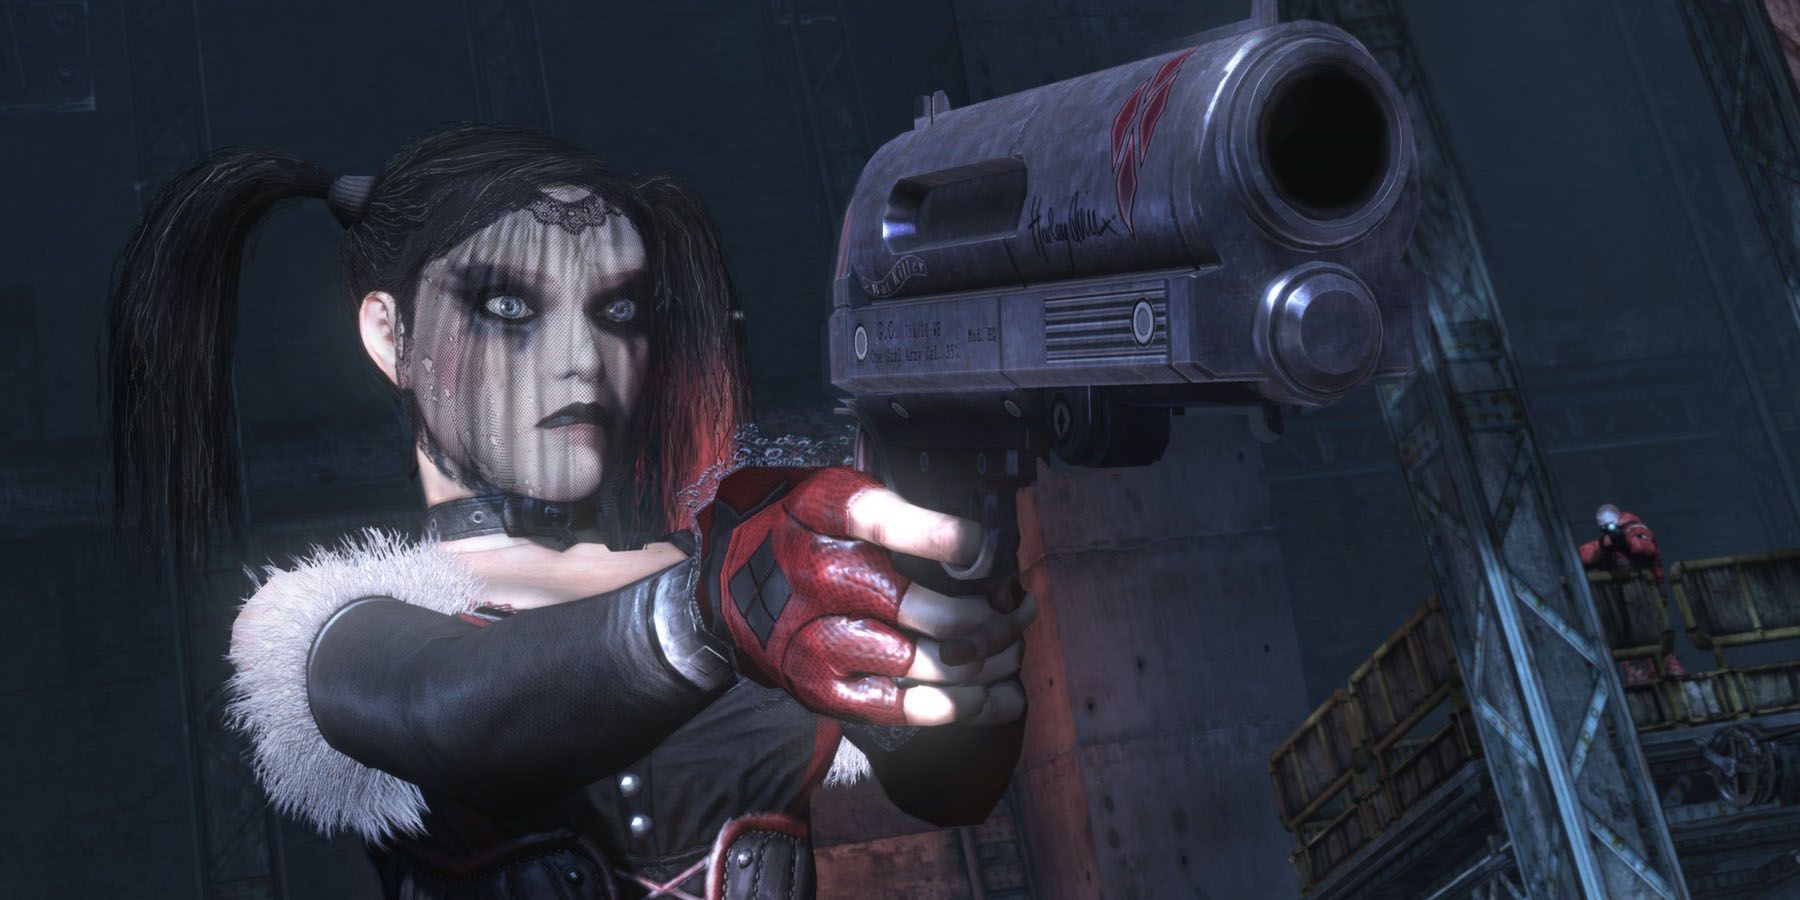 A screenshot of Harley Quinn in her black funneral veil from the Batman: Arkahm City Joker's Revenge DLC, aiming her gun at someone offscreen.